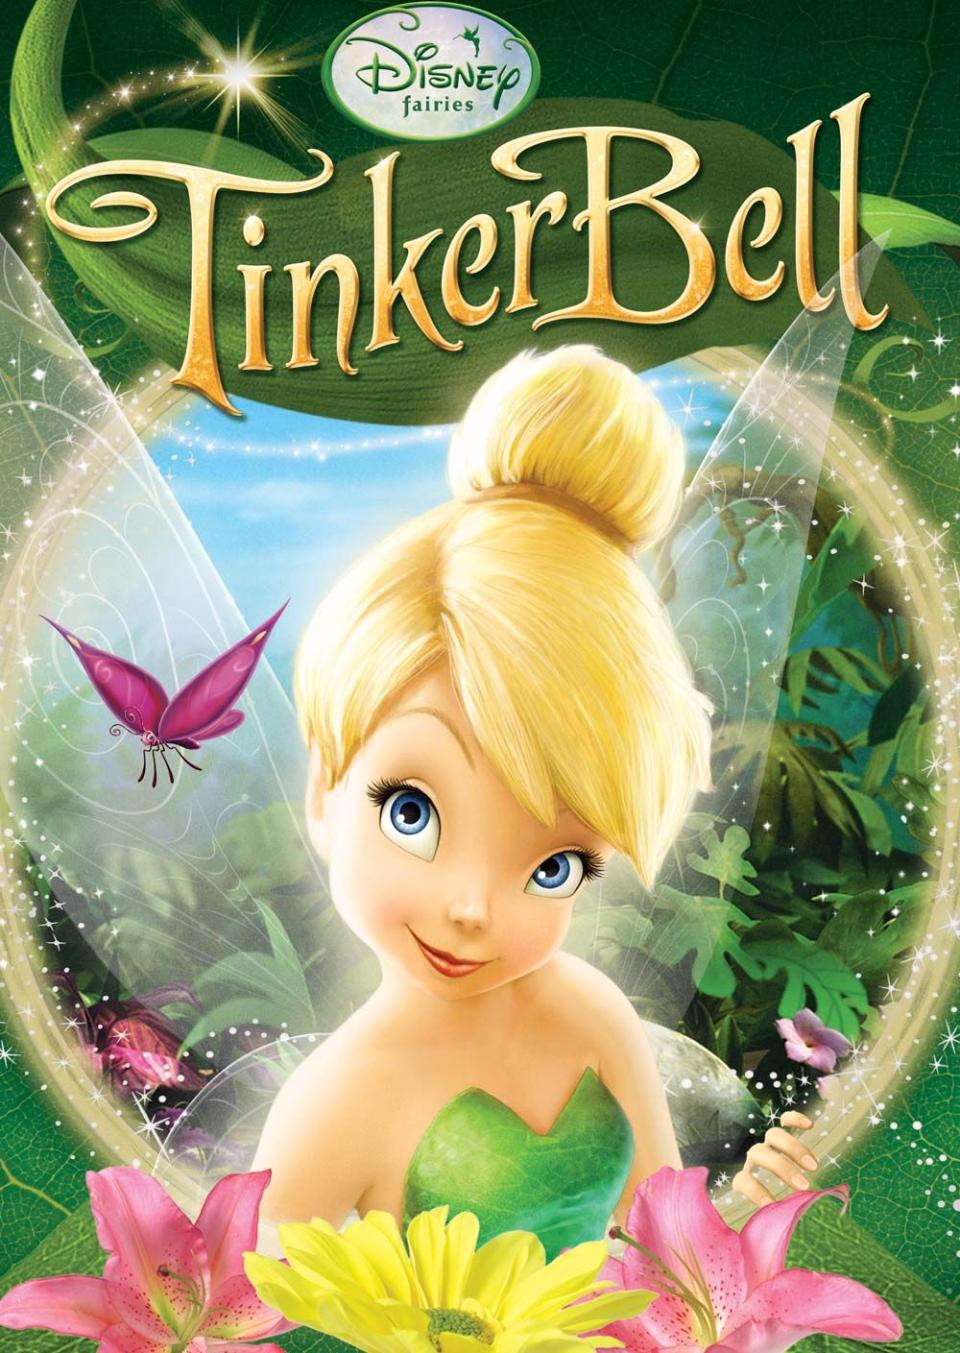 14) "Tinker Bell" (TBD)